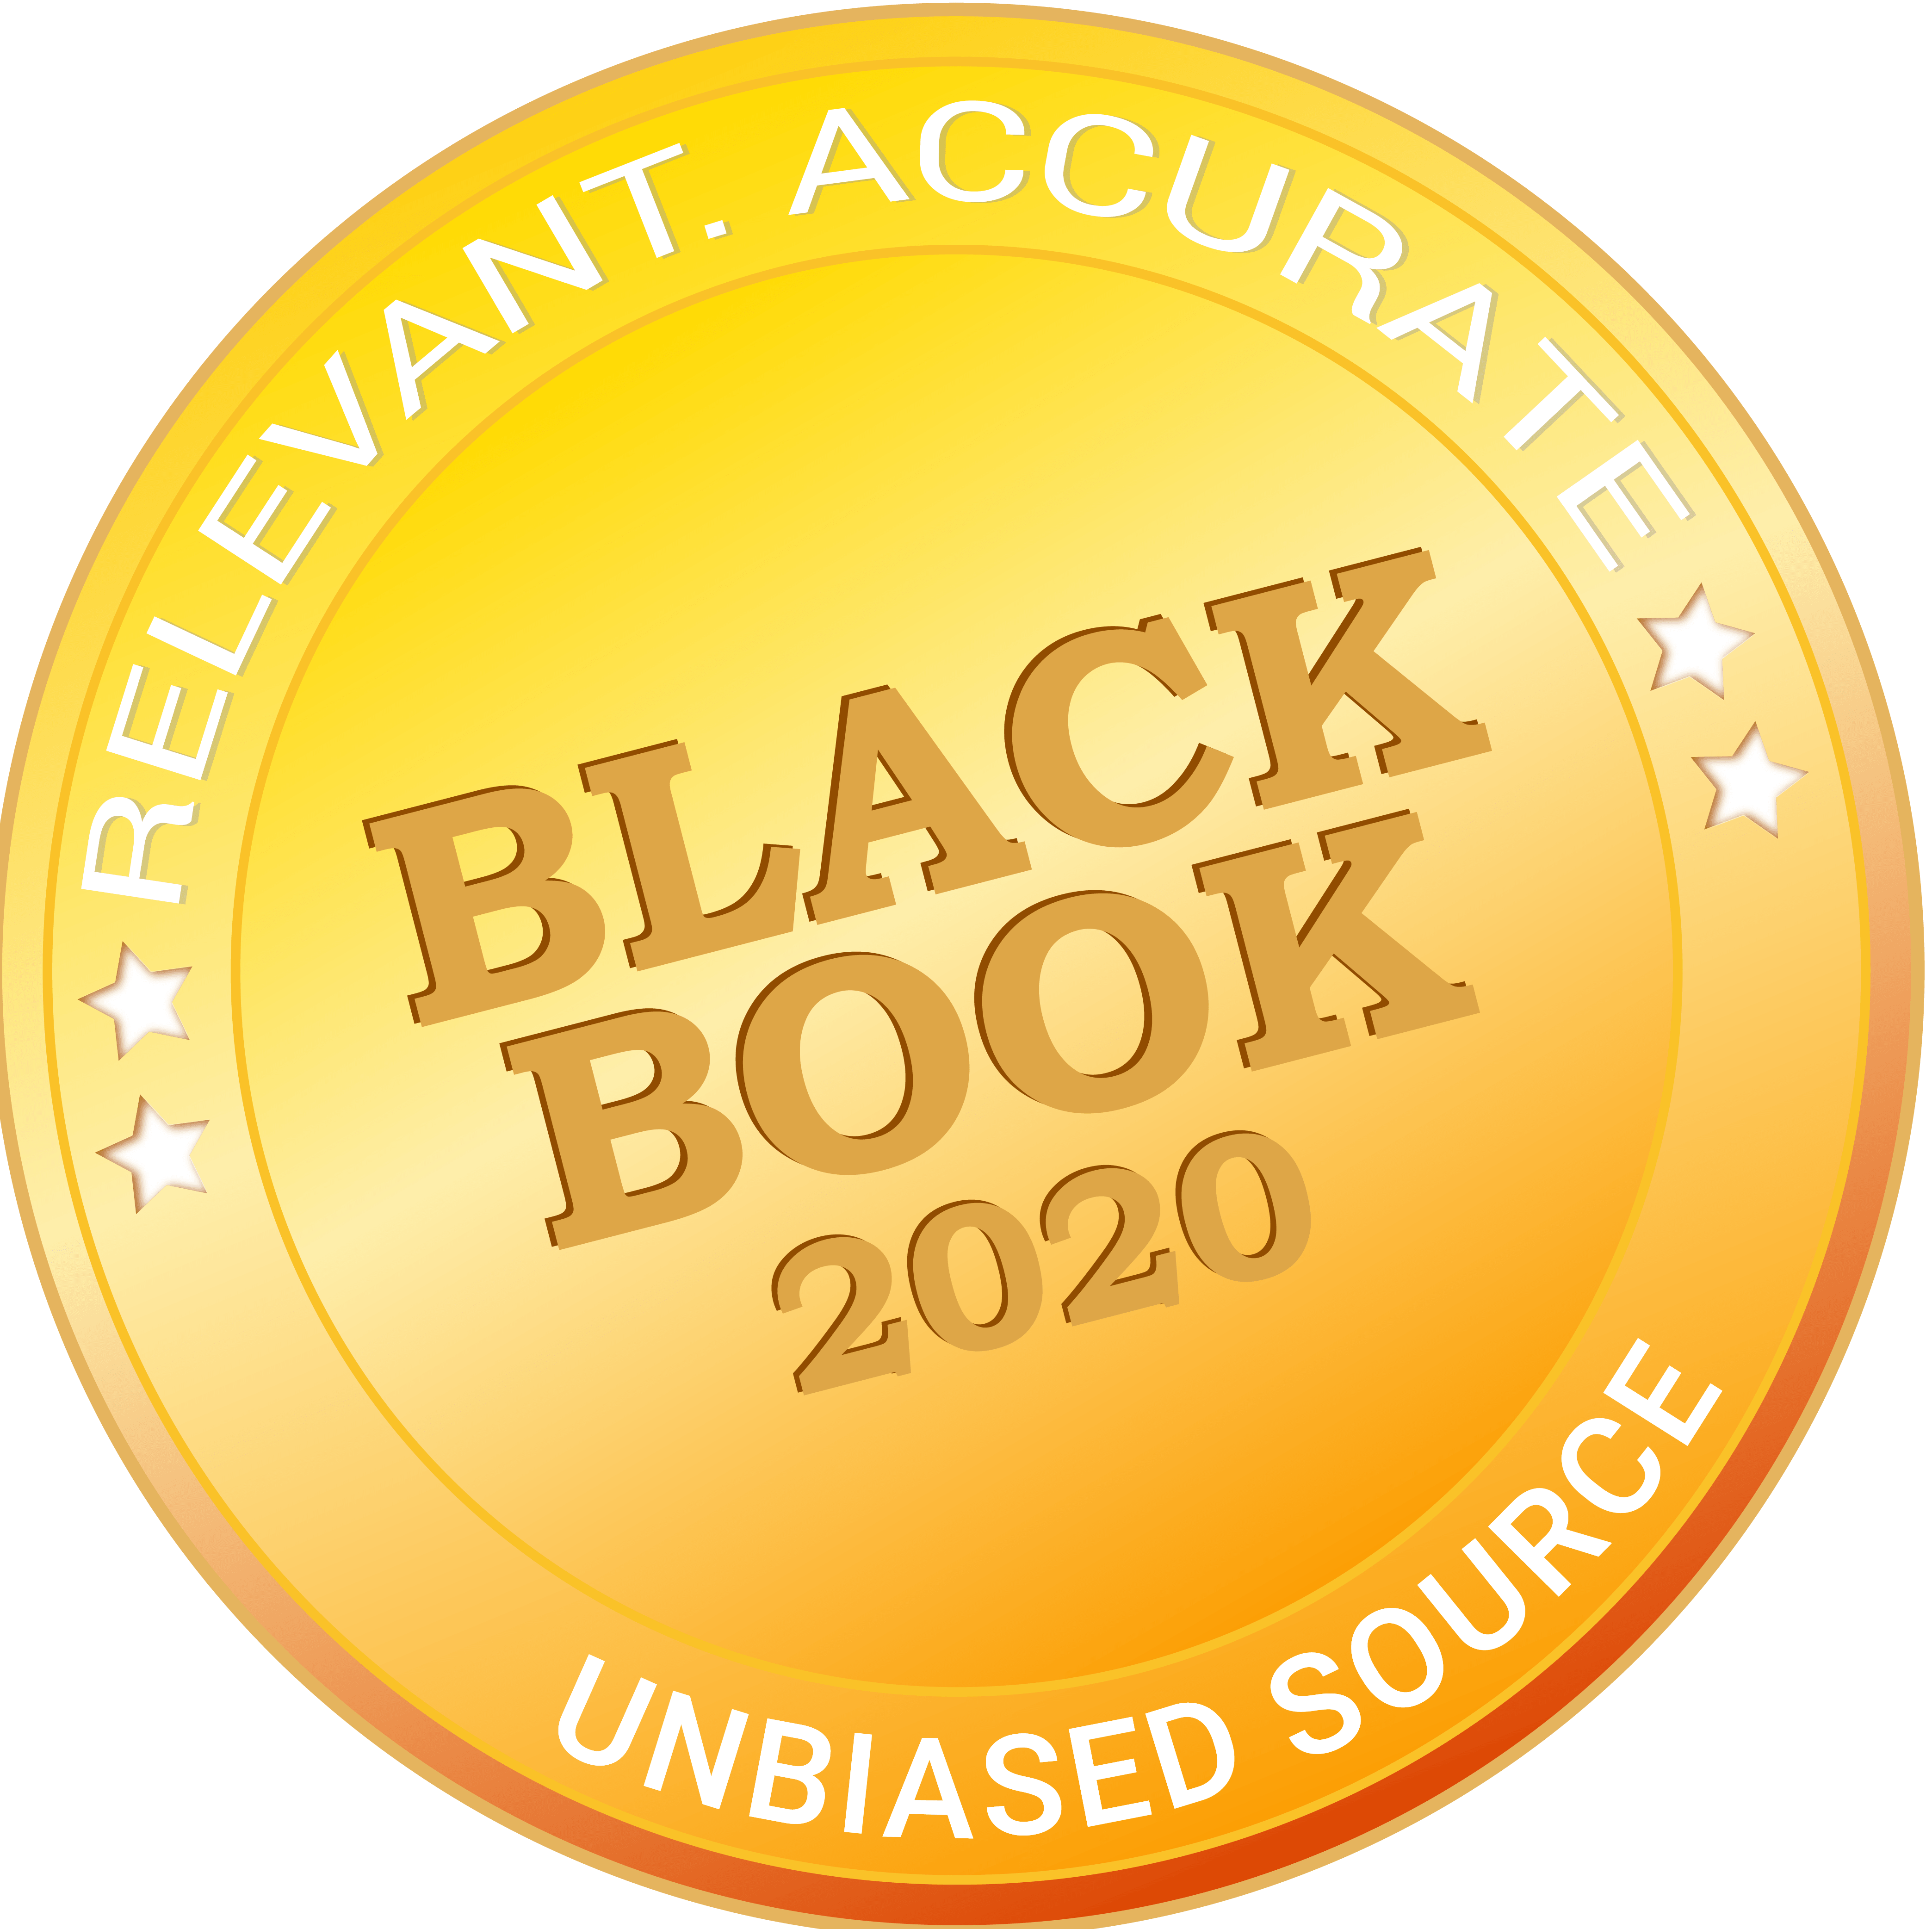 2020 Black Book Provider Contract Management Solutions Top Vendors (F2)